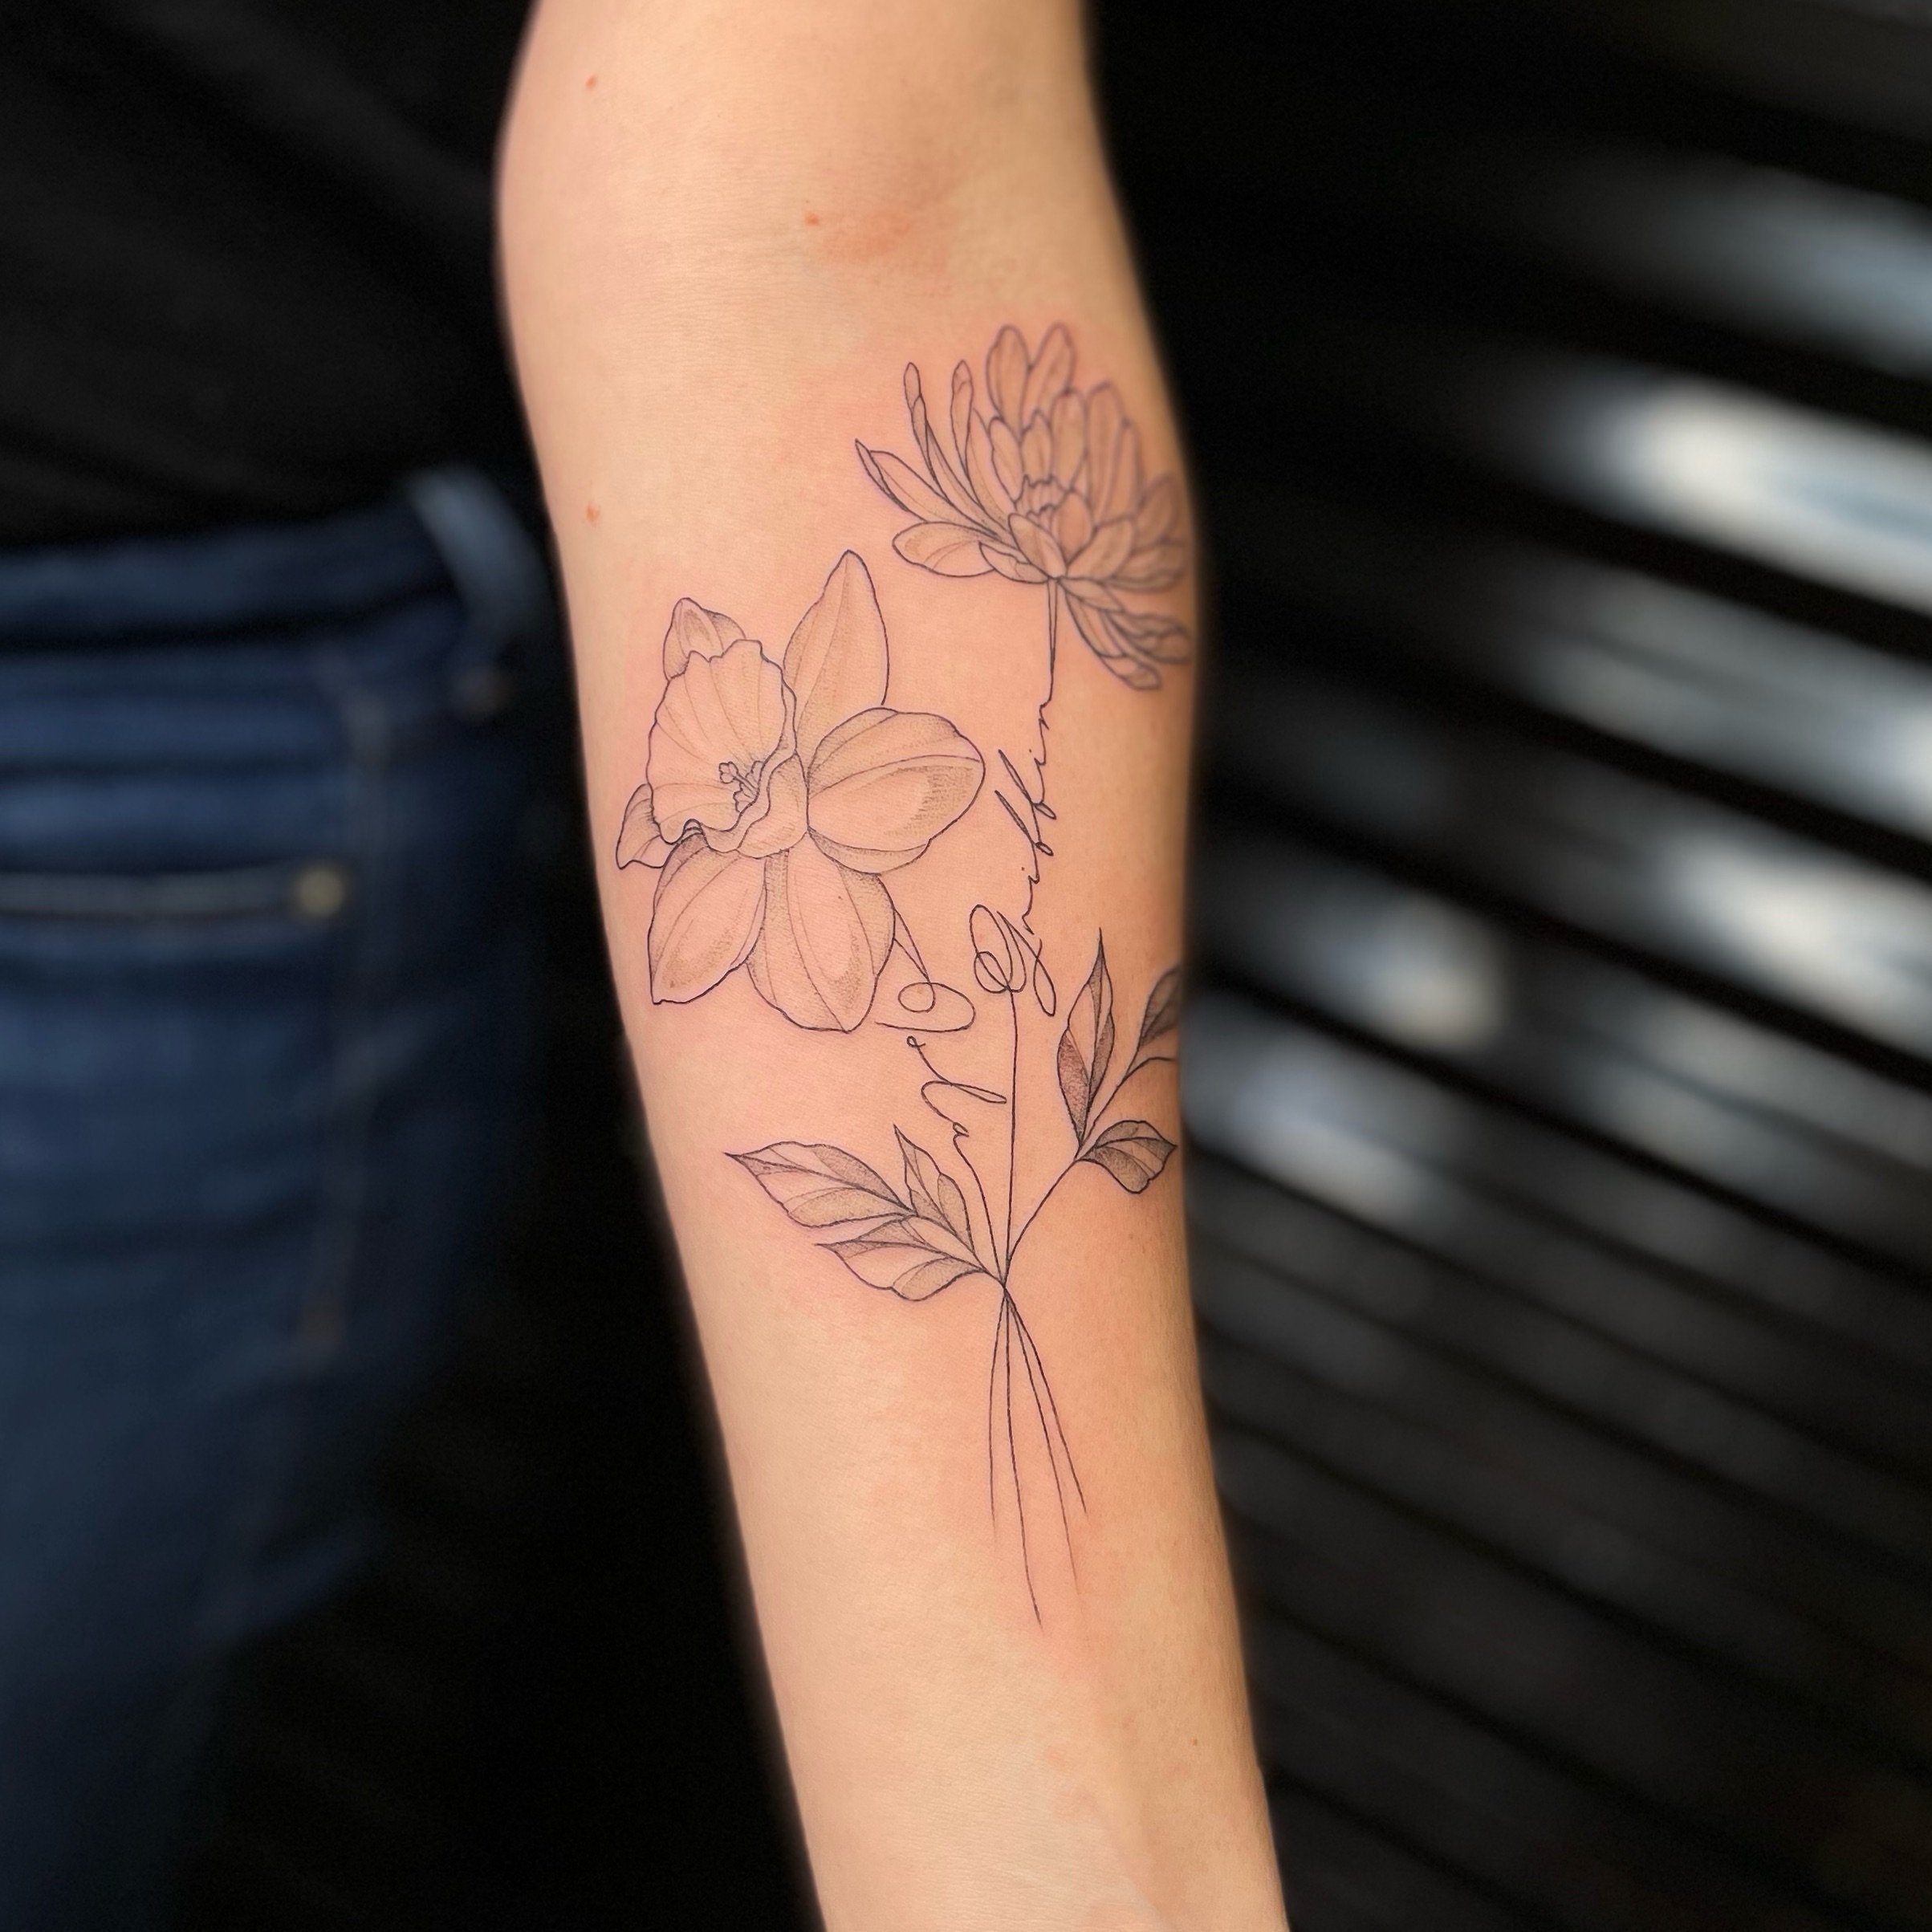 Florals and cursive done by @bailsxart at Obscura

#tattoo #tattoos #floraltattoo #flowertattoo #finelinetattoo #cursivetattoo #ottawa #ottawaartist #ottwaart